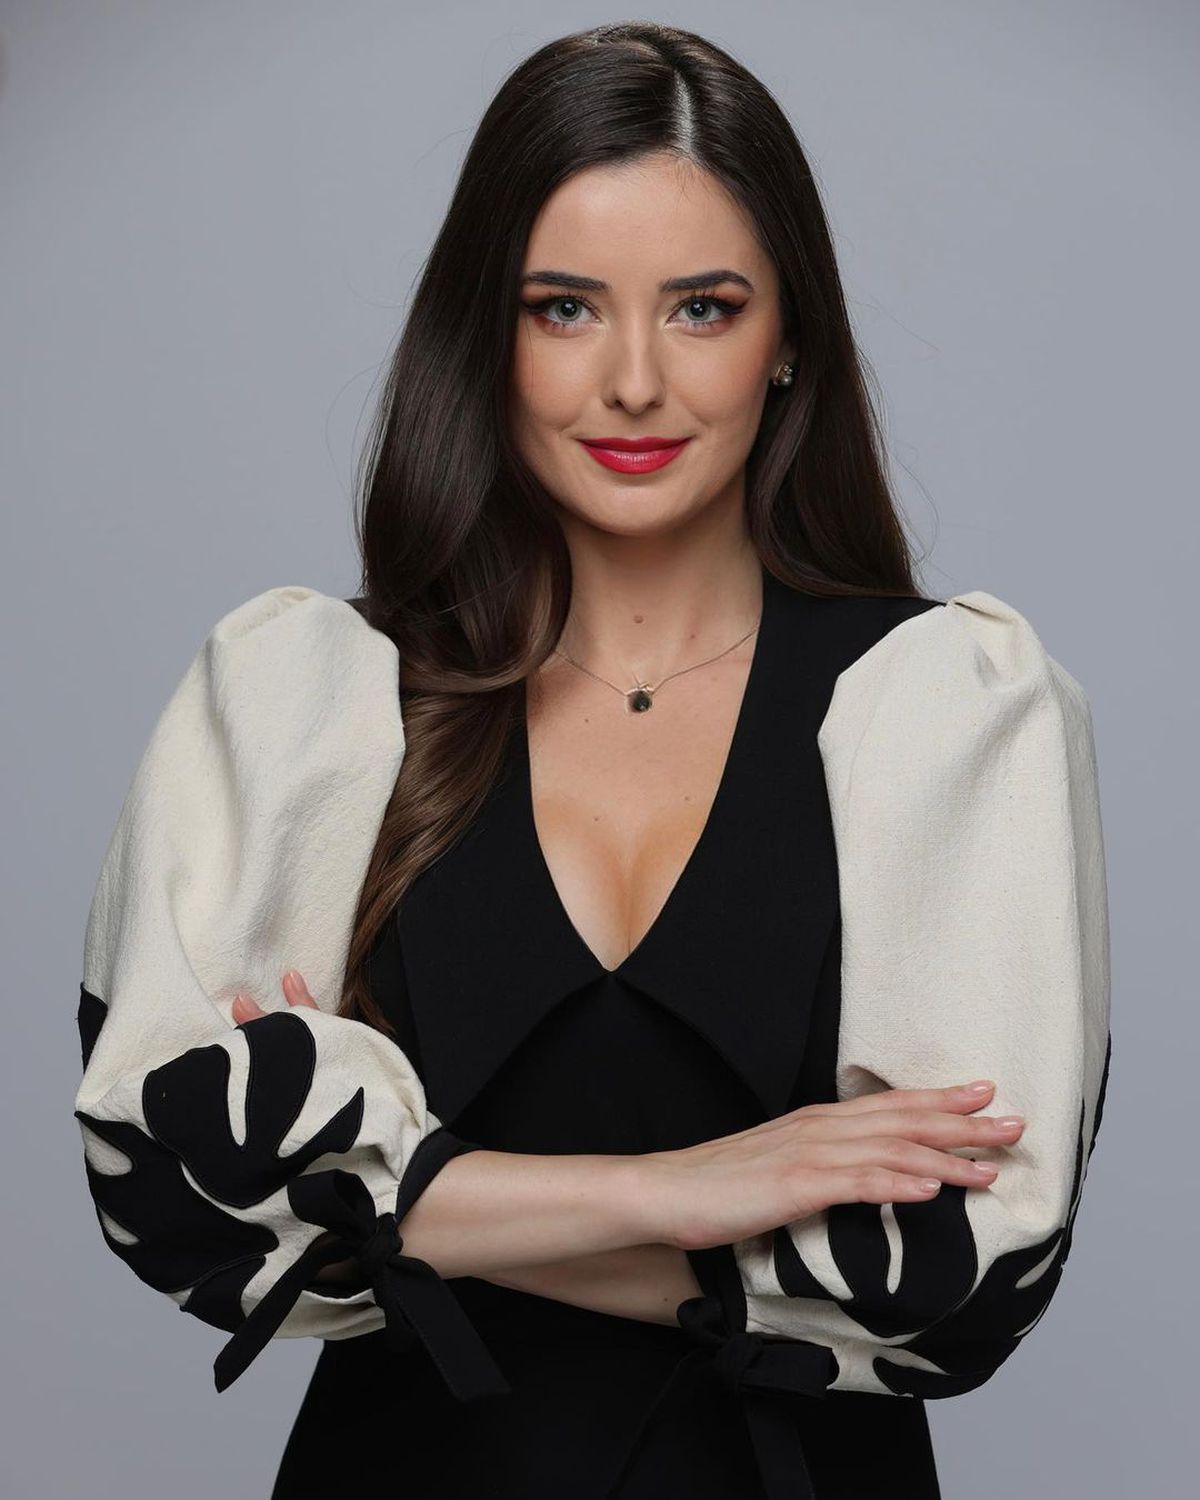 Marina Nițoiu